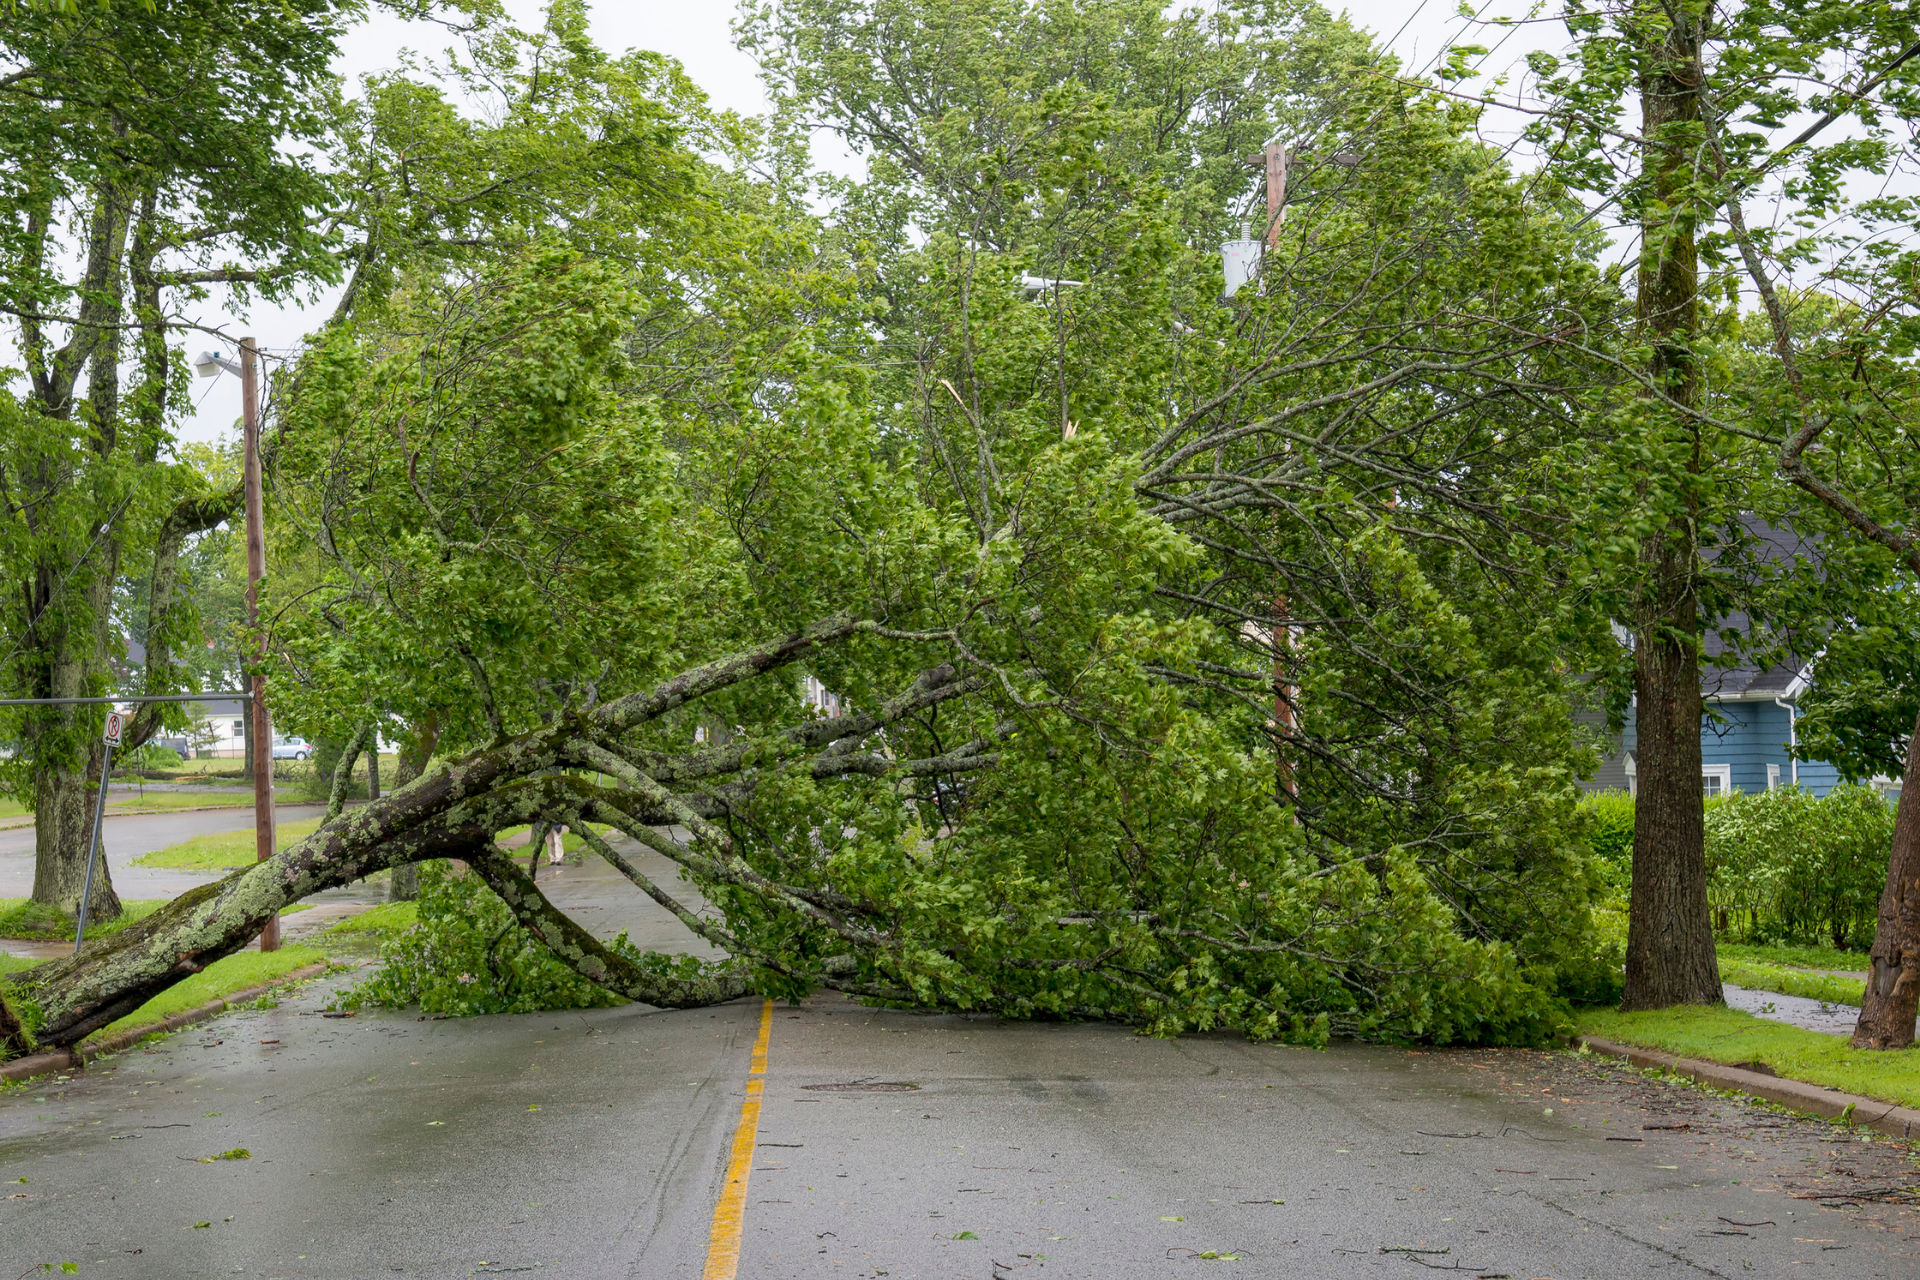 large fallen tree across the road, emergency tree removal